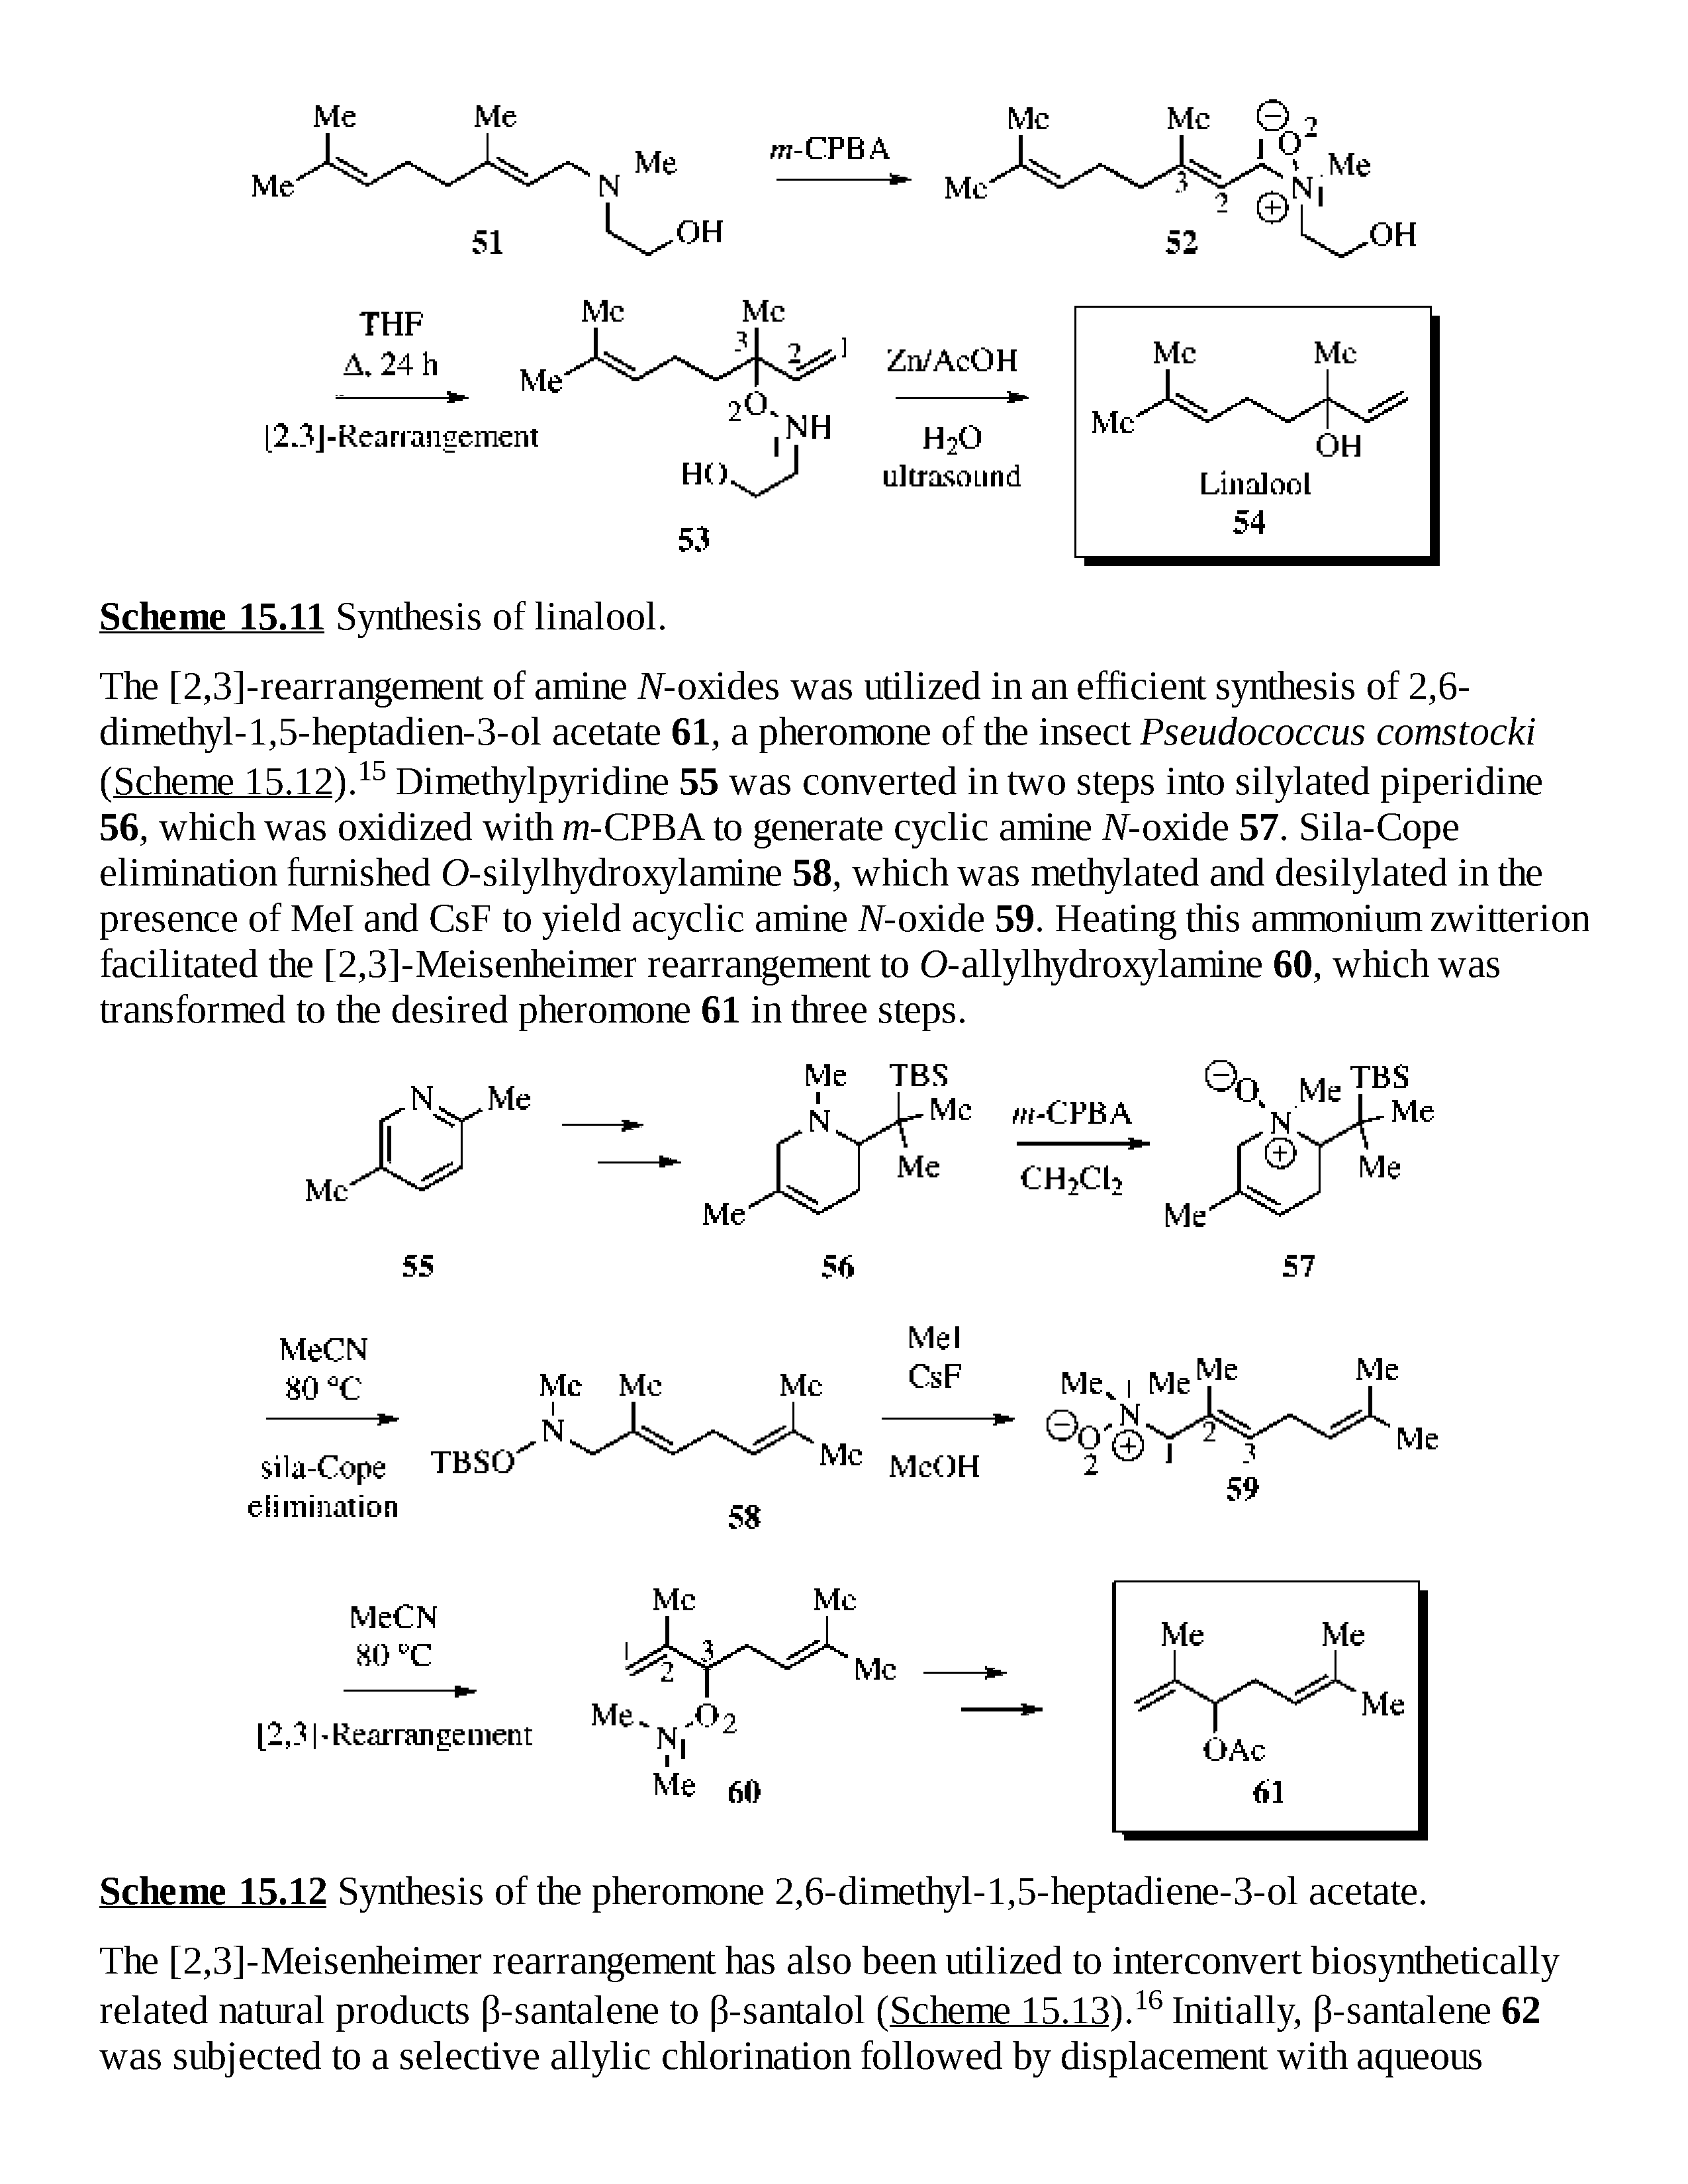 Scheme 15.12 Synthesis of the pheromone 2,6-dimethyl-l,5-heptadiene-3-ol acetate.